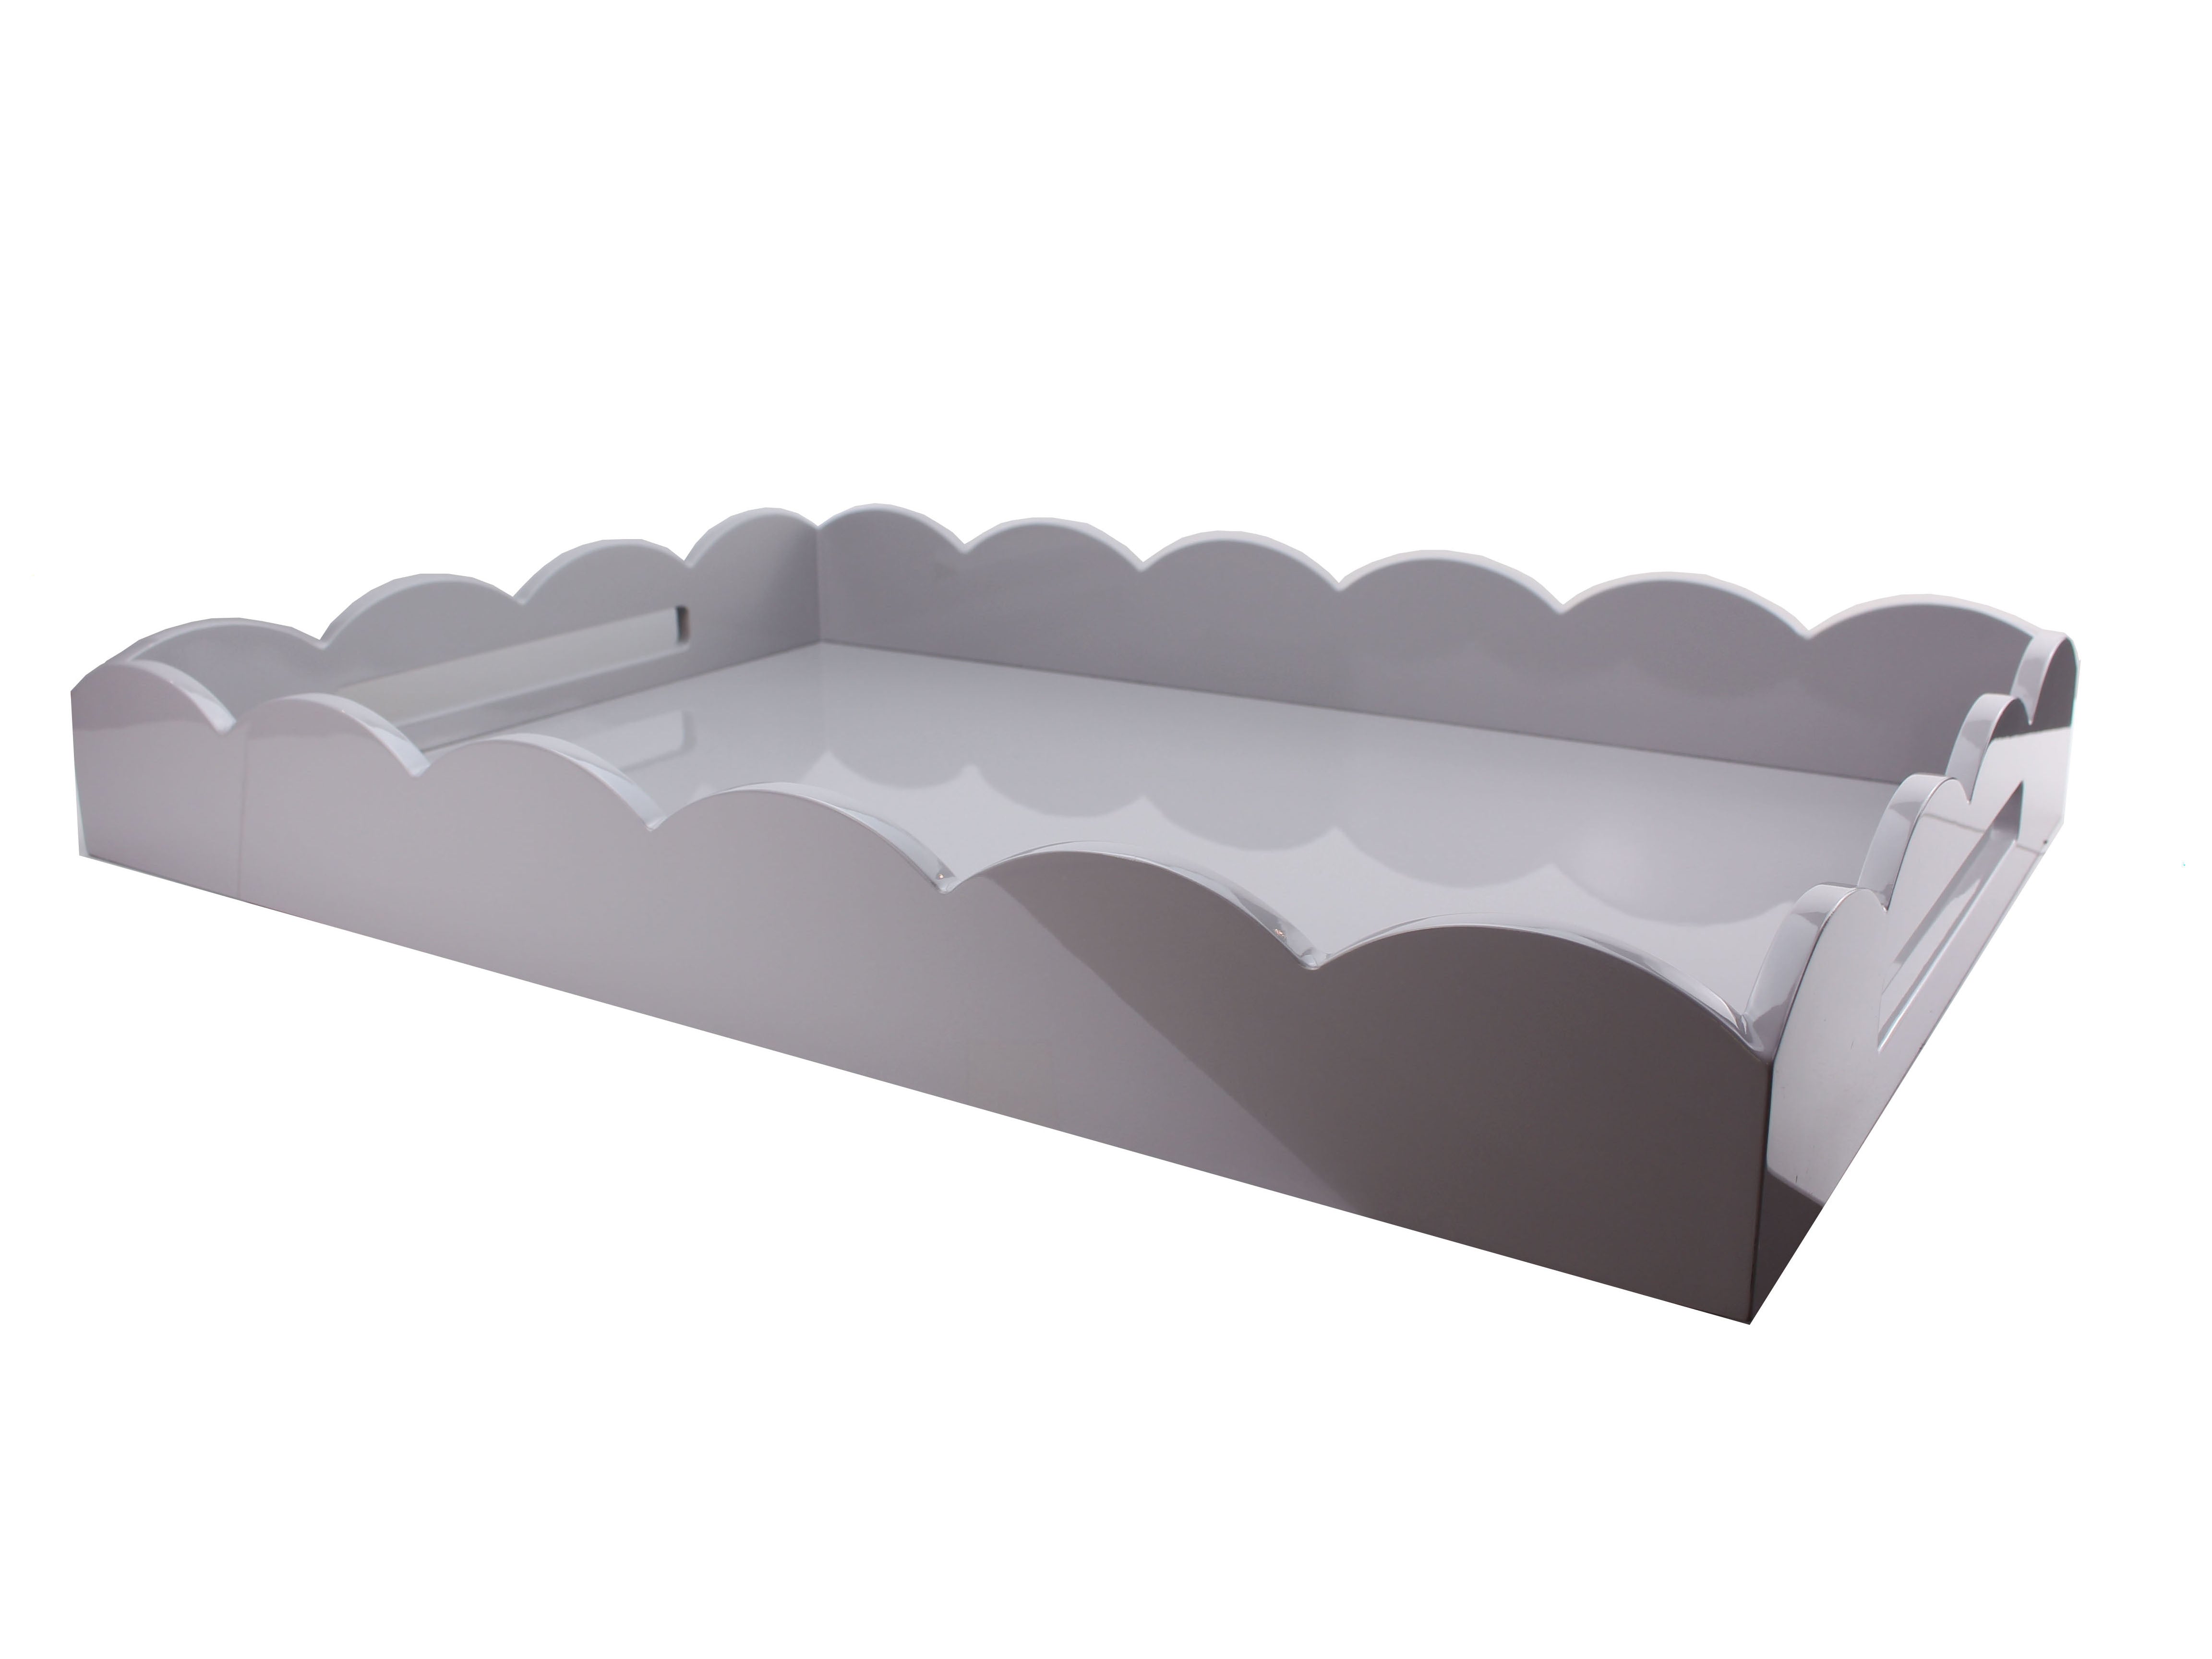 Large scalloped tray | grey | addison ross